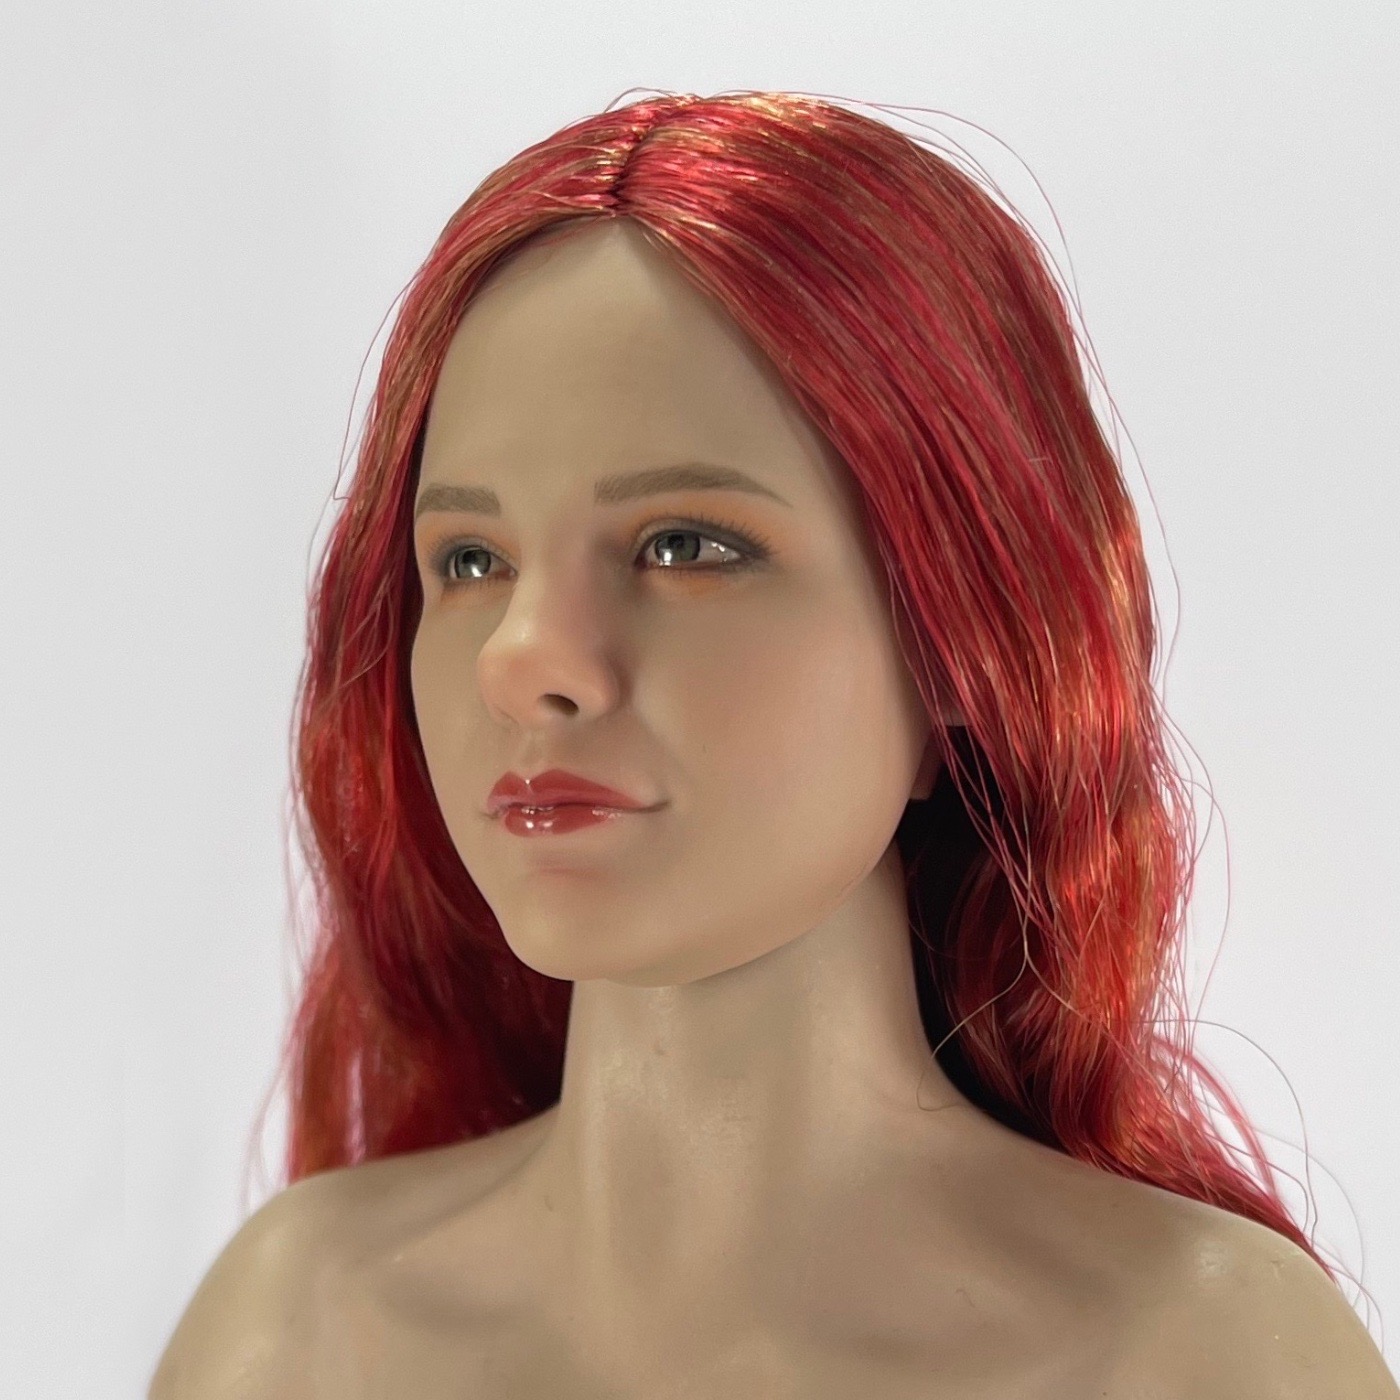 accessory - NEW PRODUCT: SUPER DUCK SDH036 1/6 Scale Female head sculpt in 4 styles 52860116643_3d0fe88b7d_o